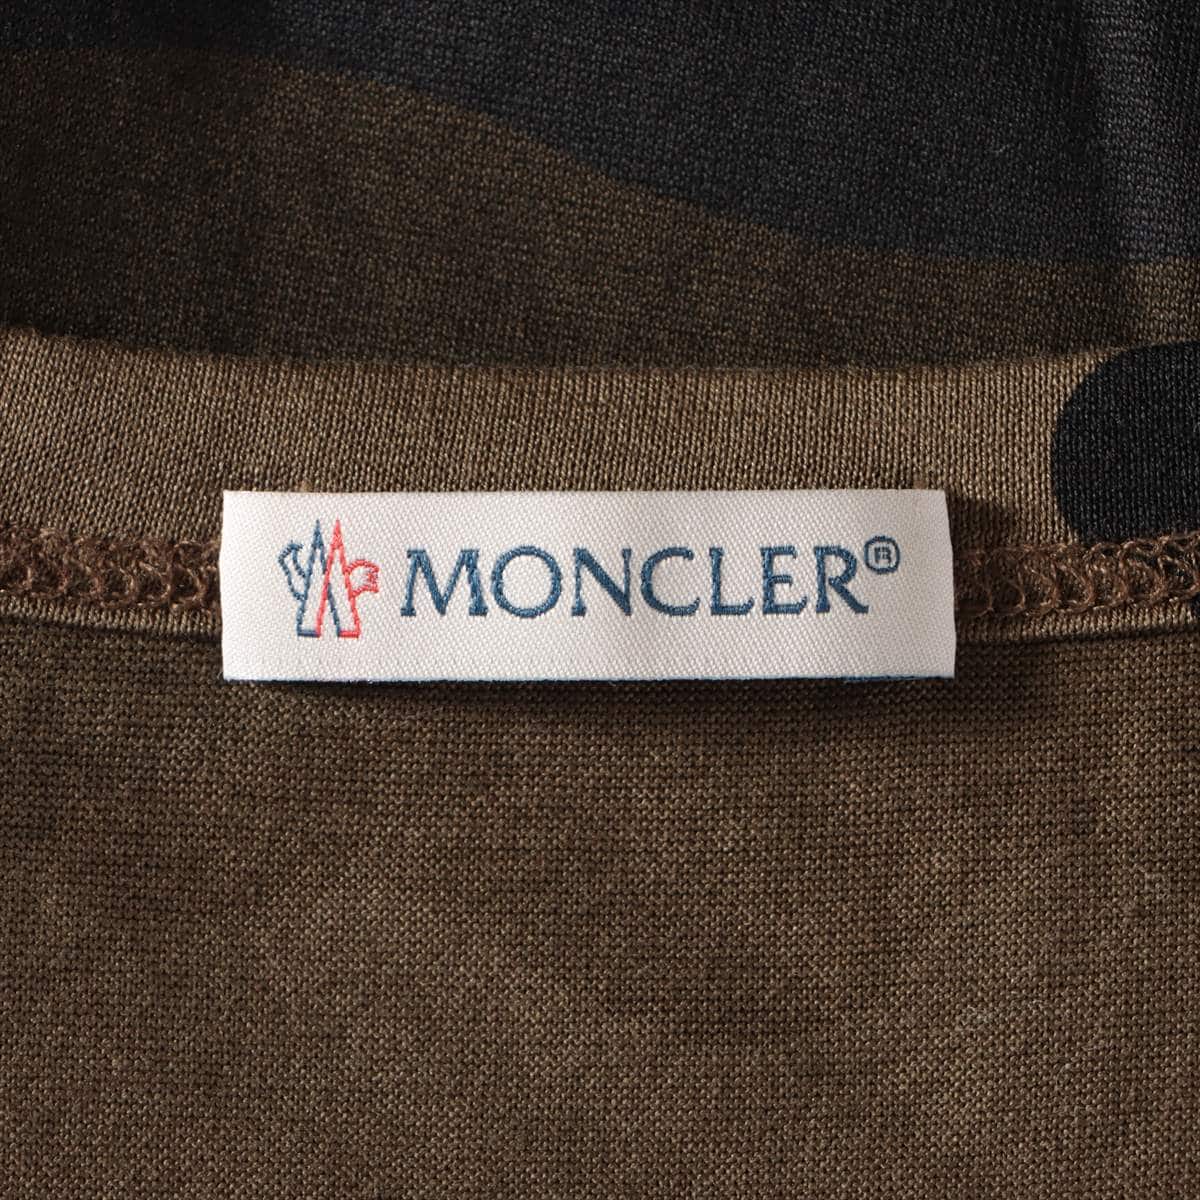 Moncler 18 years Cotton T-shirt XL Men's Camouflage